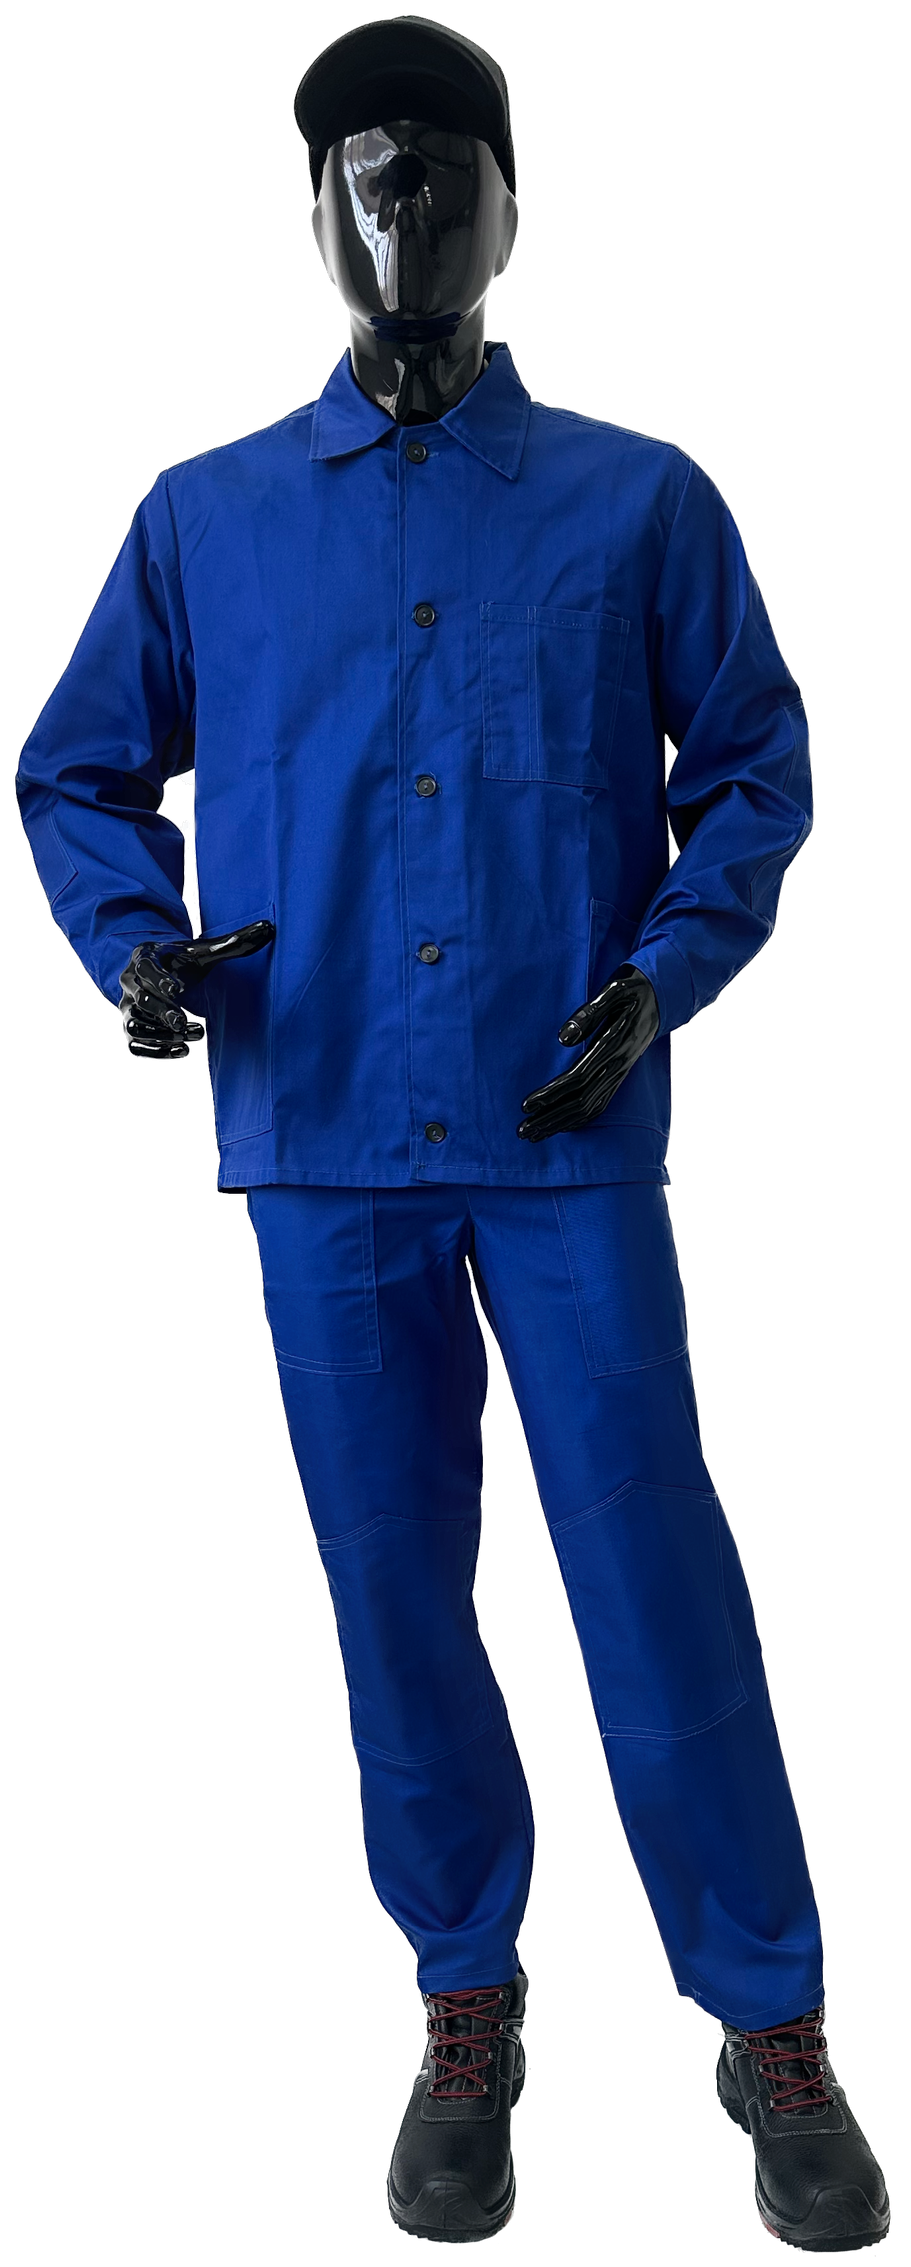 Костюм робочий ЄВРО, Саржа, (куртка, брюки), 03655 Фото